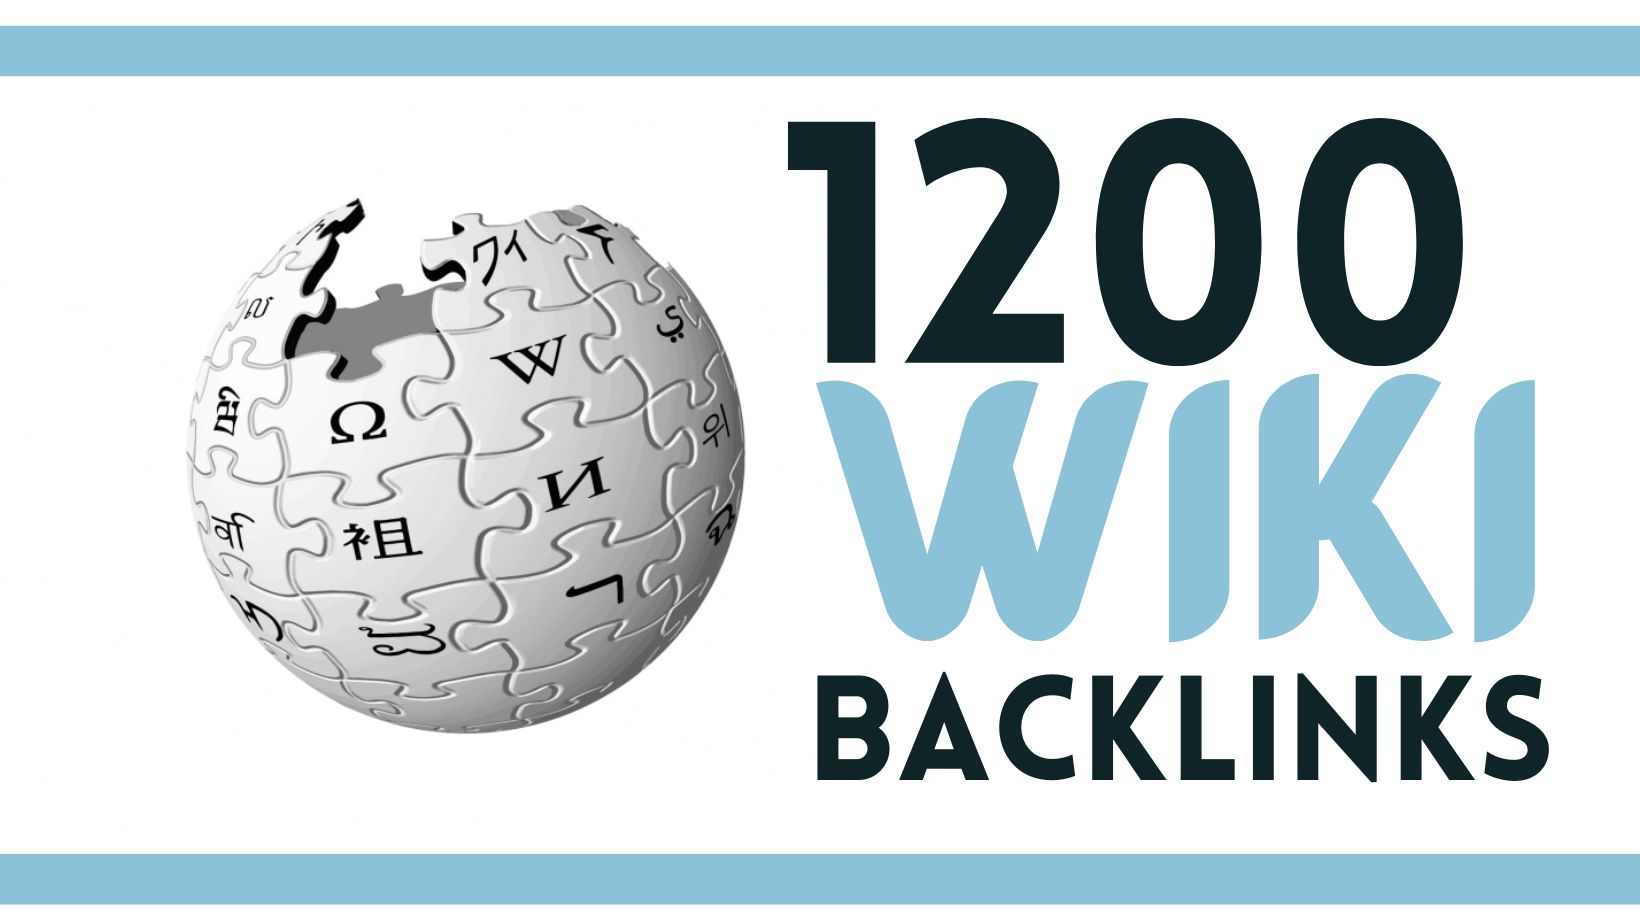 1200 Wiki Backlinks | Contextual Backlinks | SEO Optimized Strategies | High DA50+